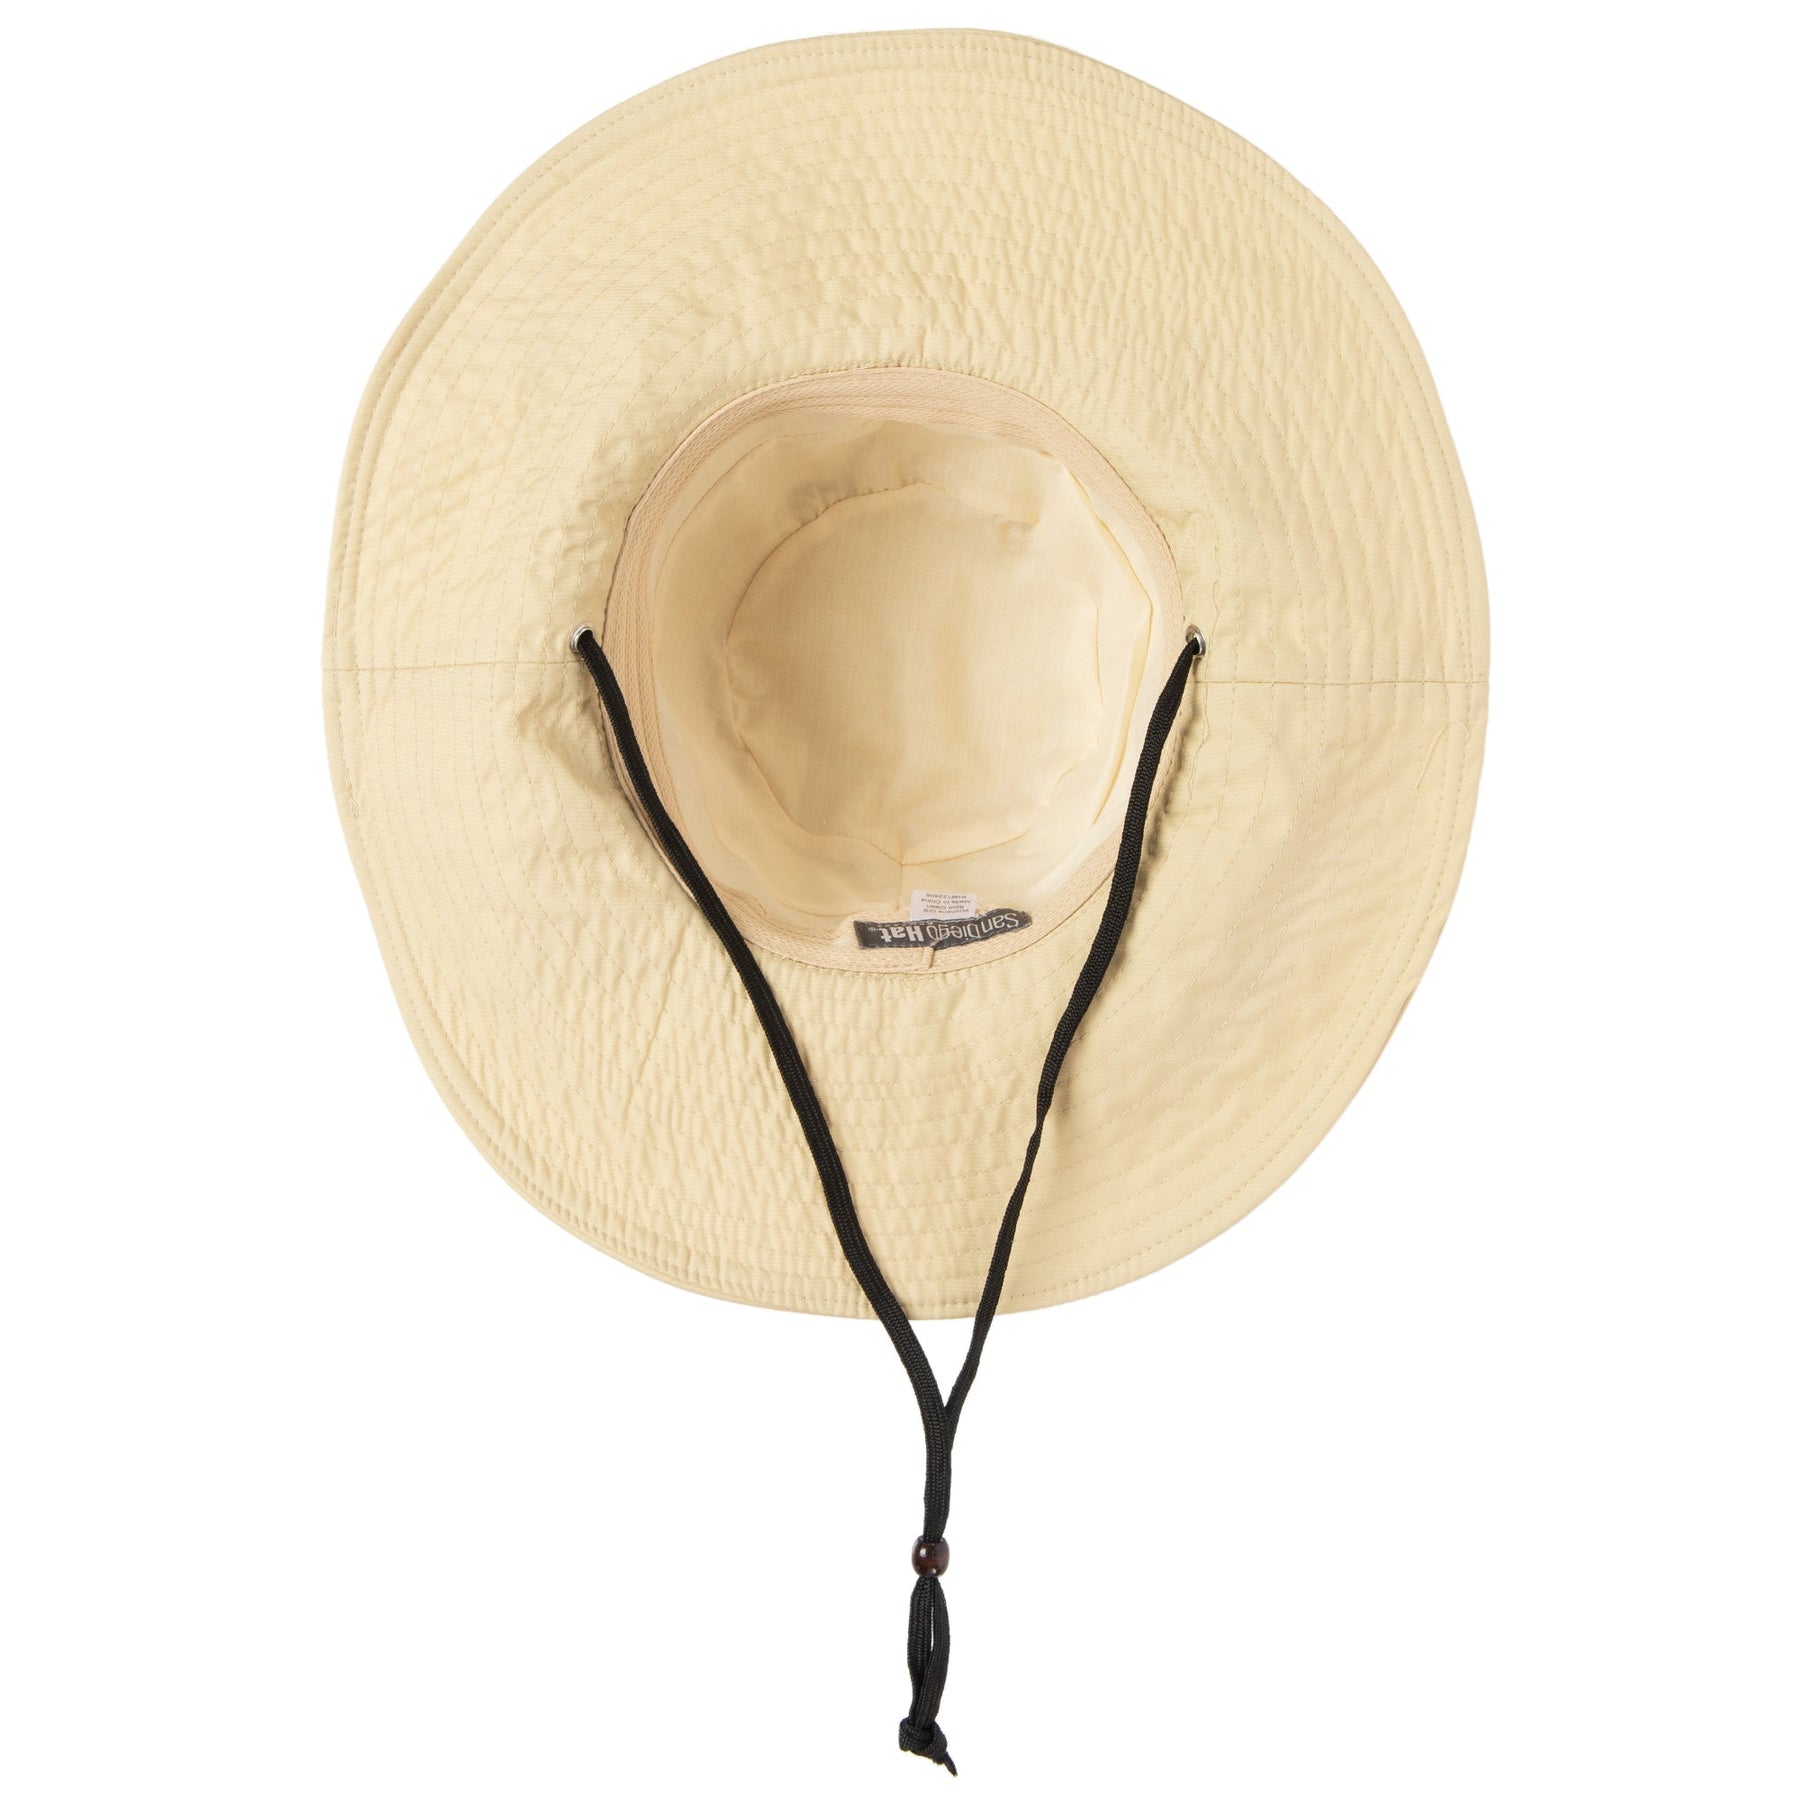 San Diego Sun hat – RMO HATS /